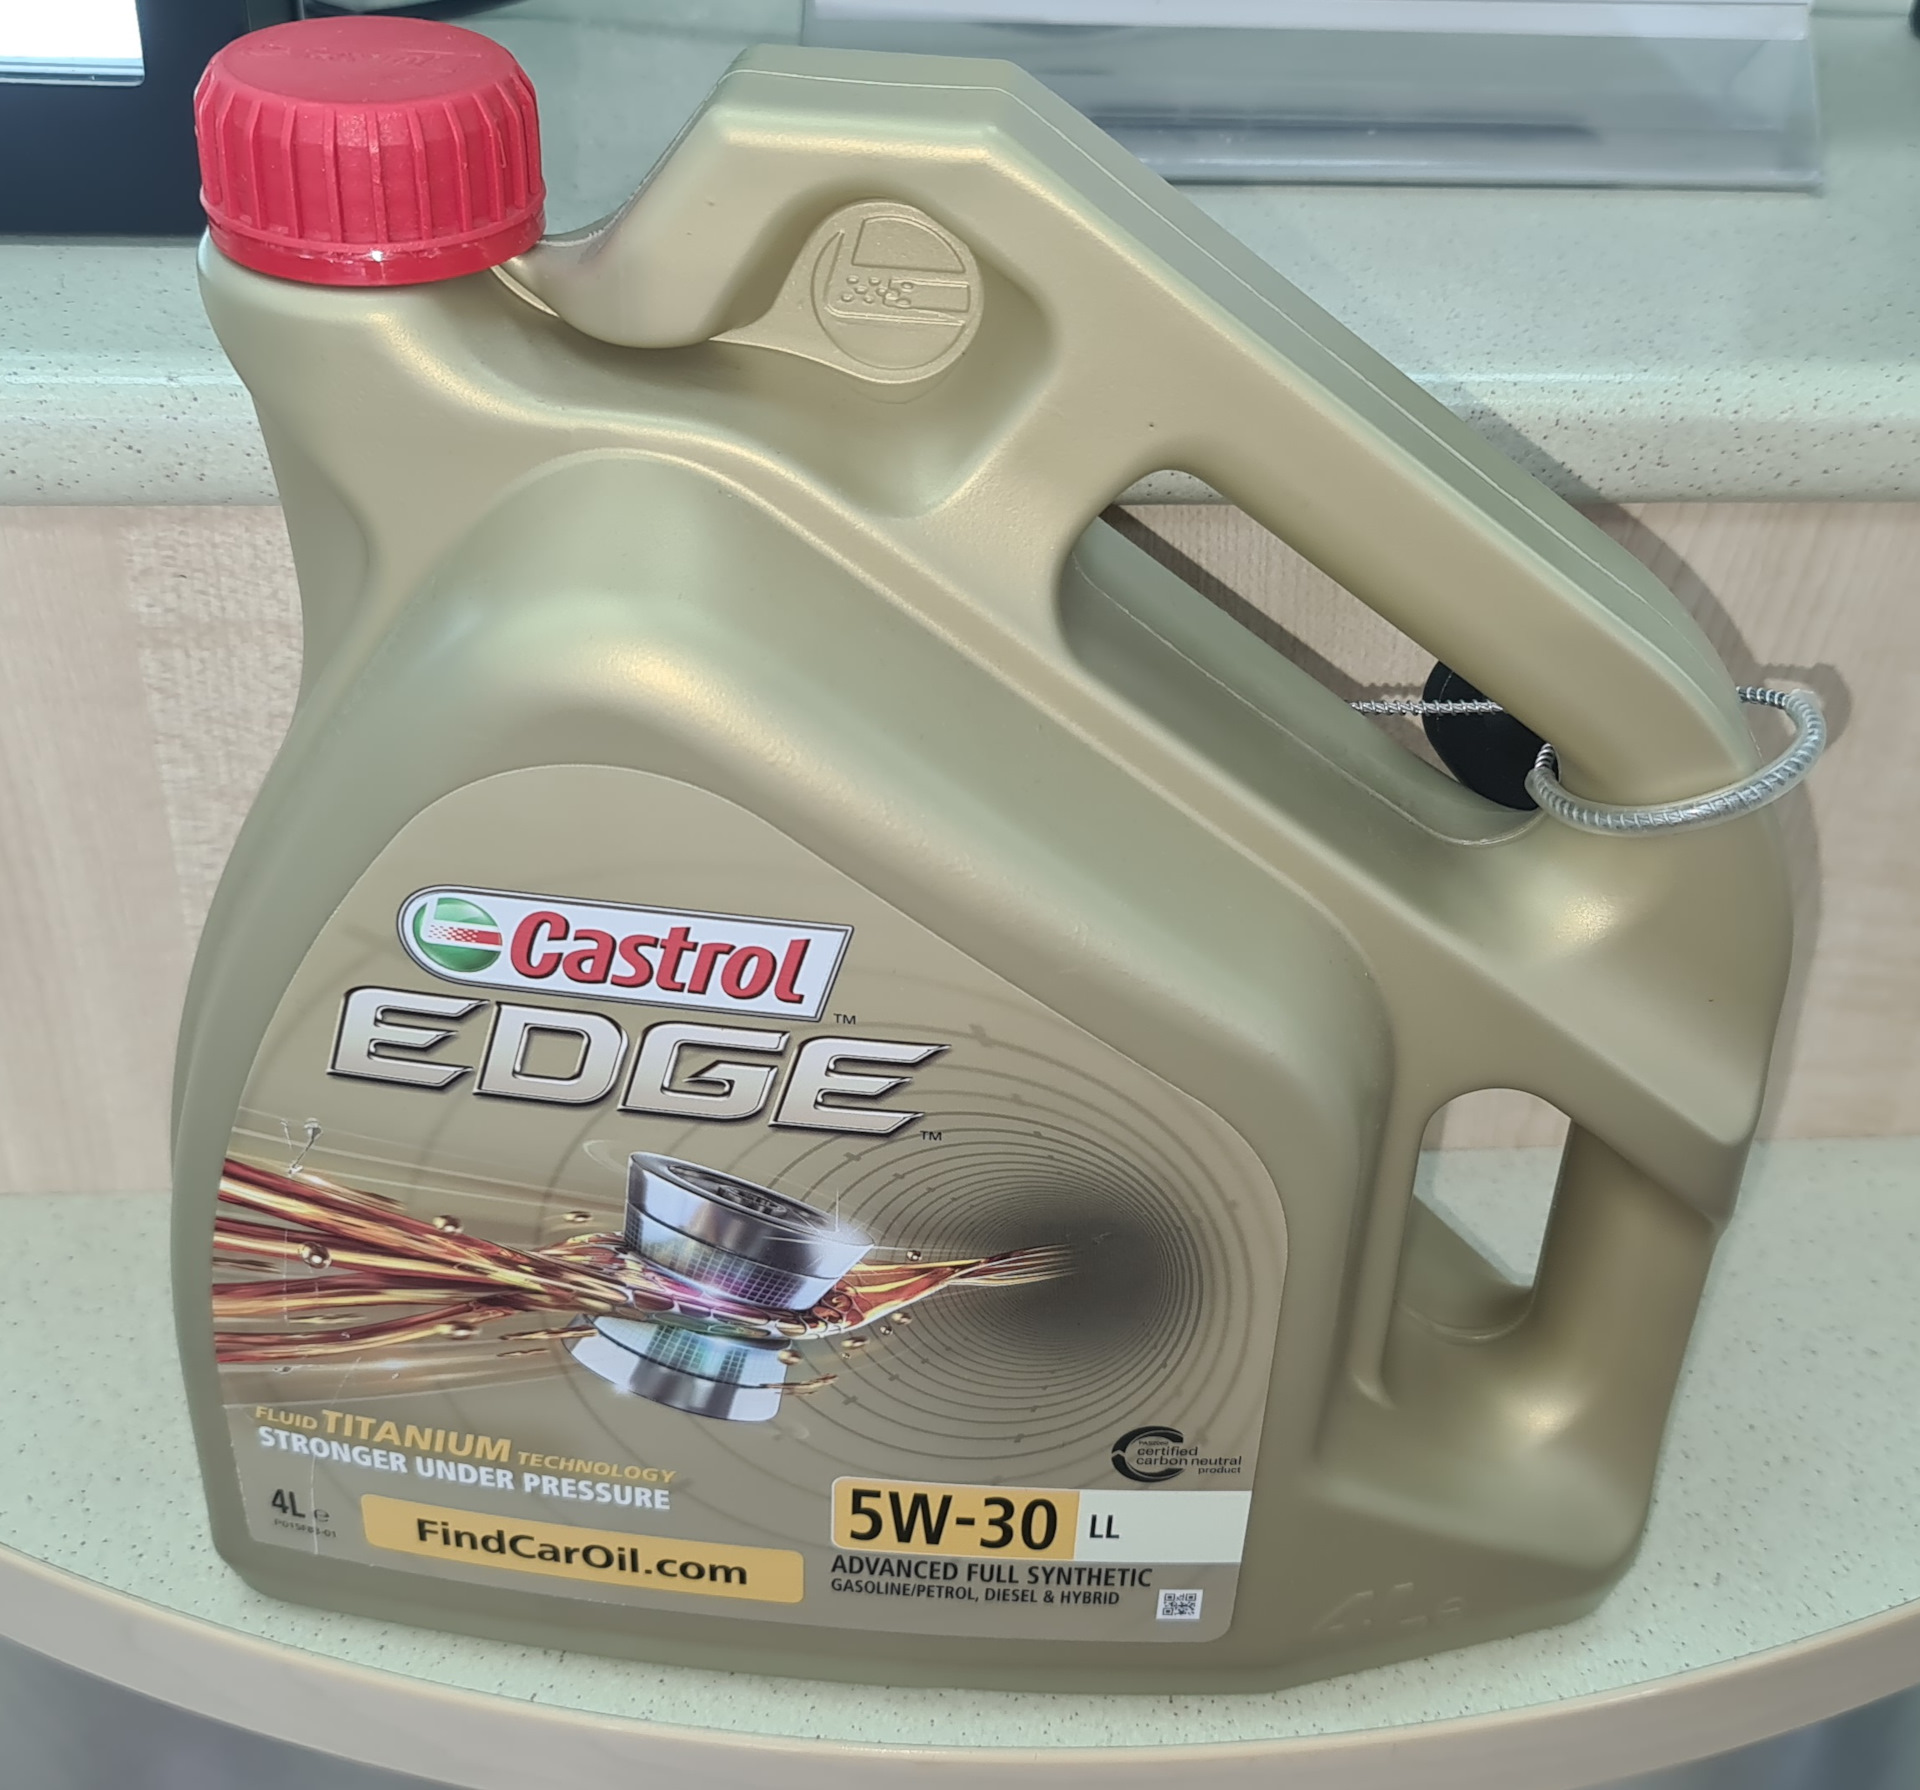 Castrol Edge Titanium 5w40 новая канистра. 83222413512 Аналог Castrol. Кастрол Edge новая упаковка. Castrol Oil poster 2000 x.